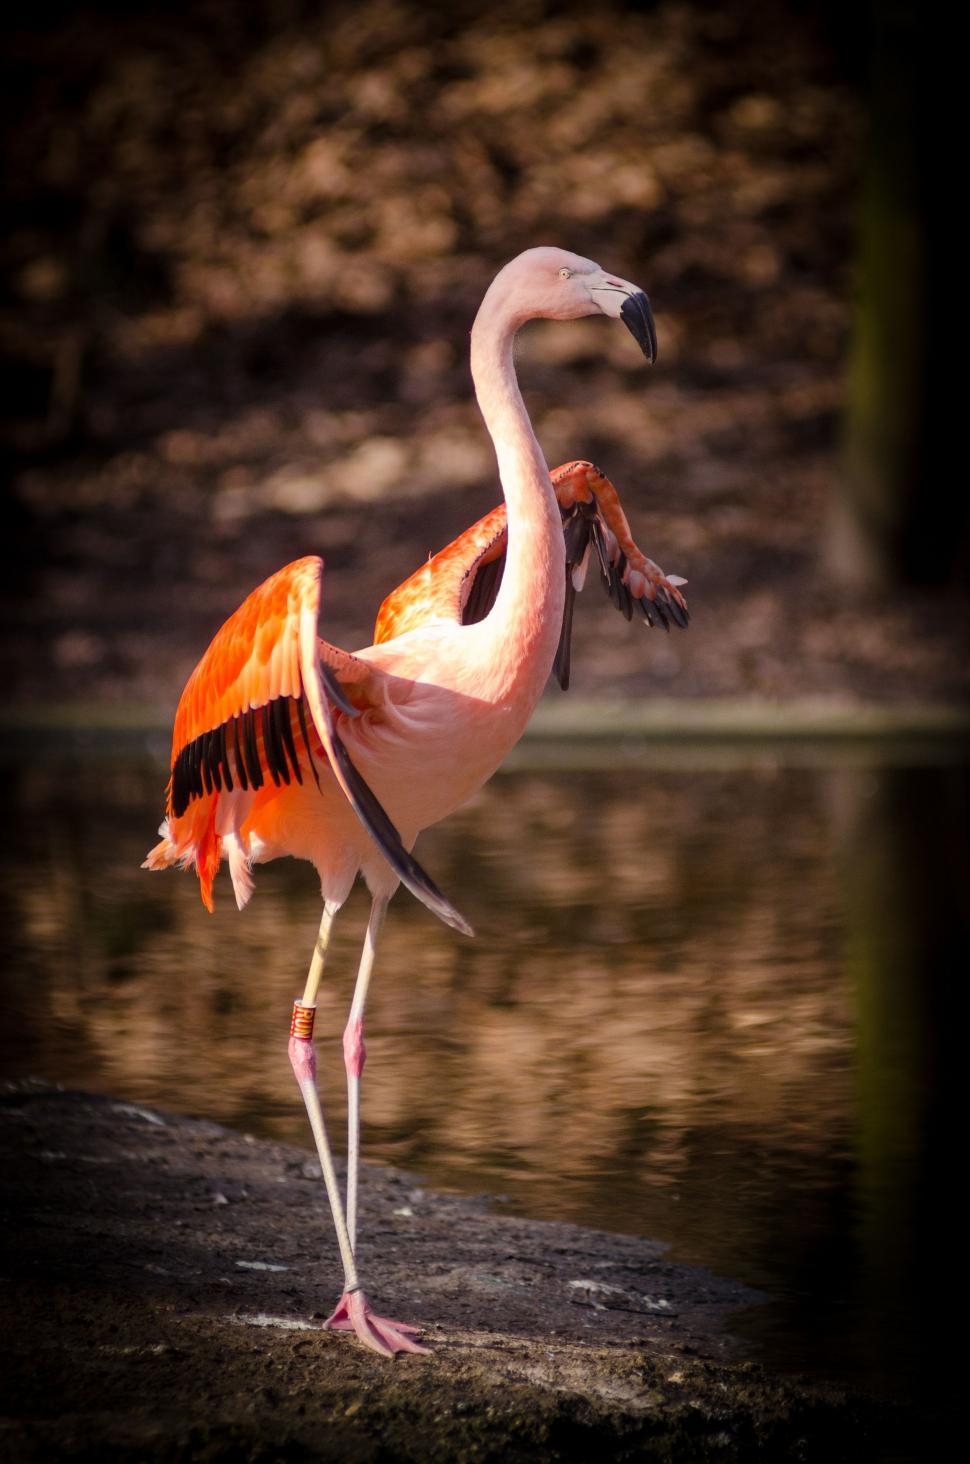 Free Image of Orange Flamingo with open wings  